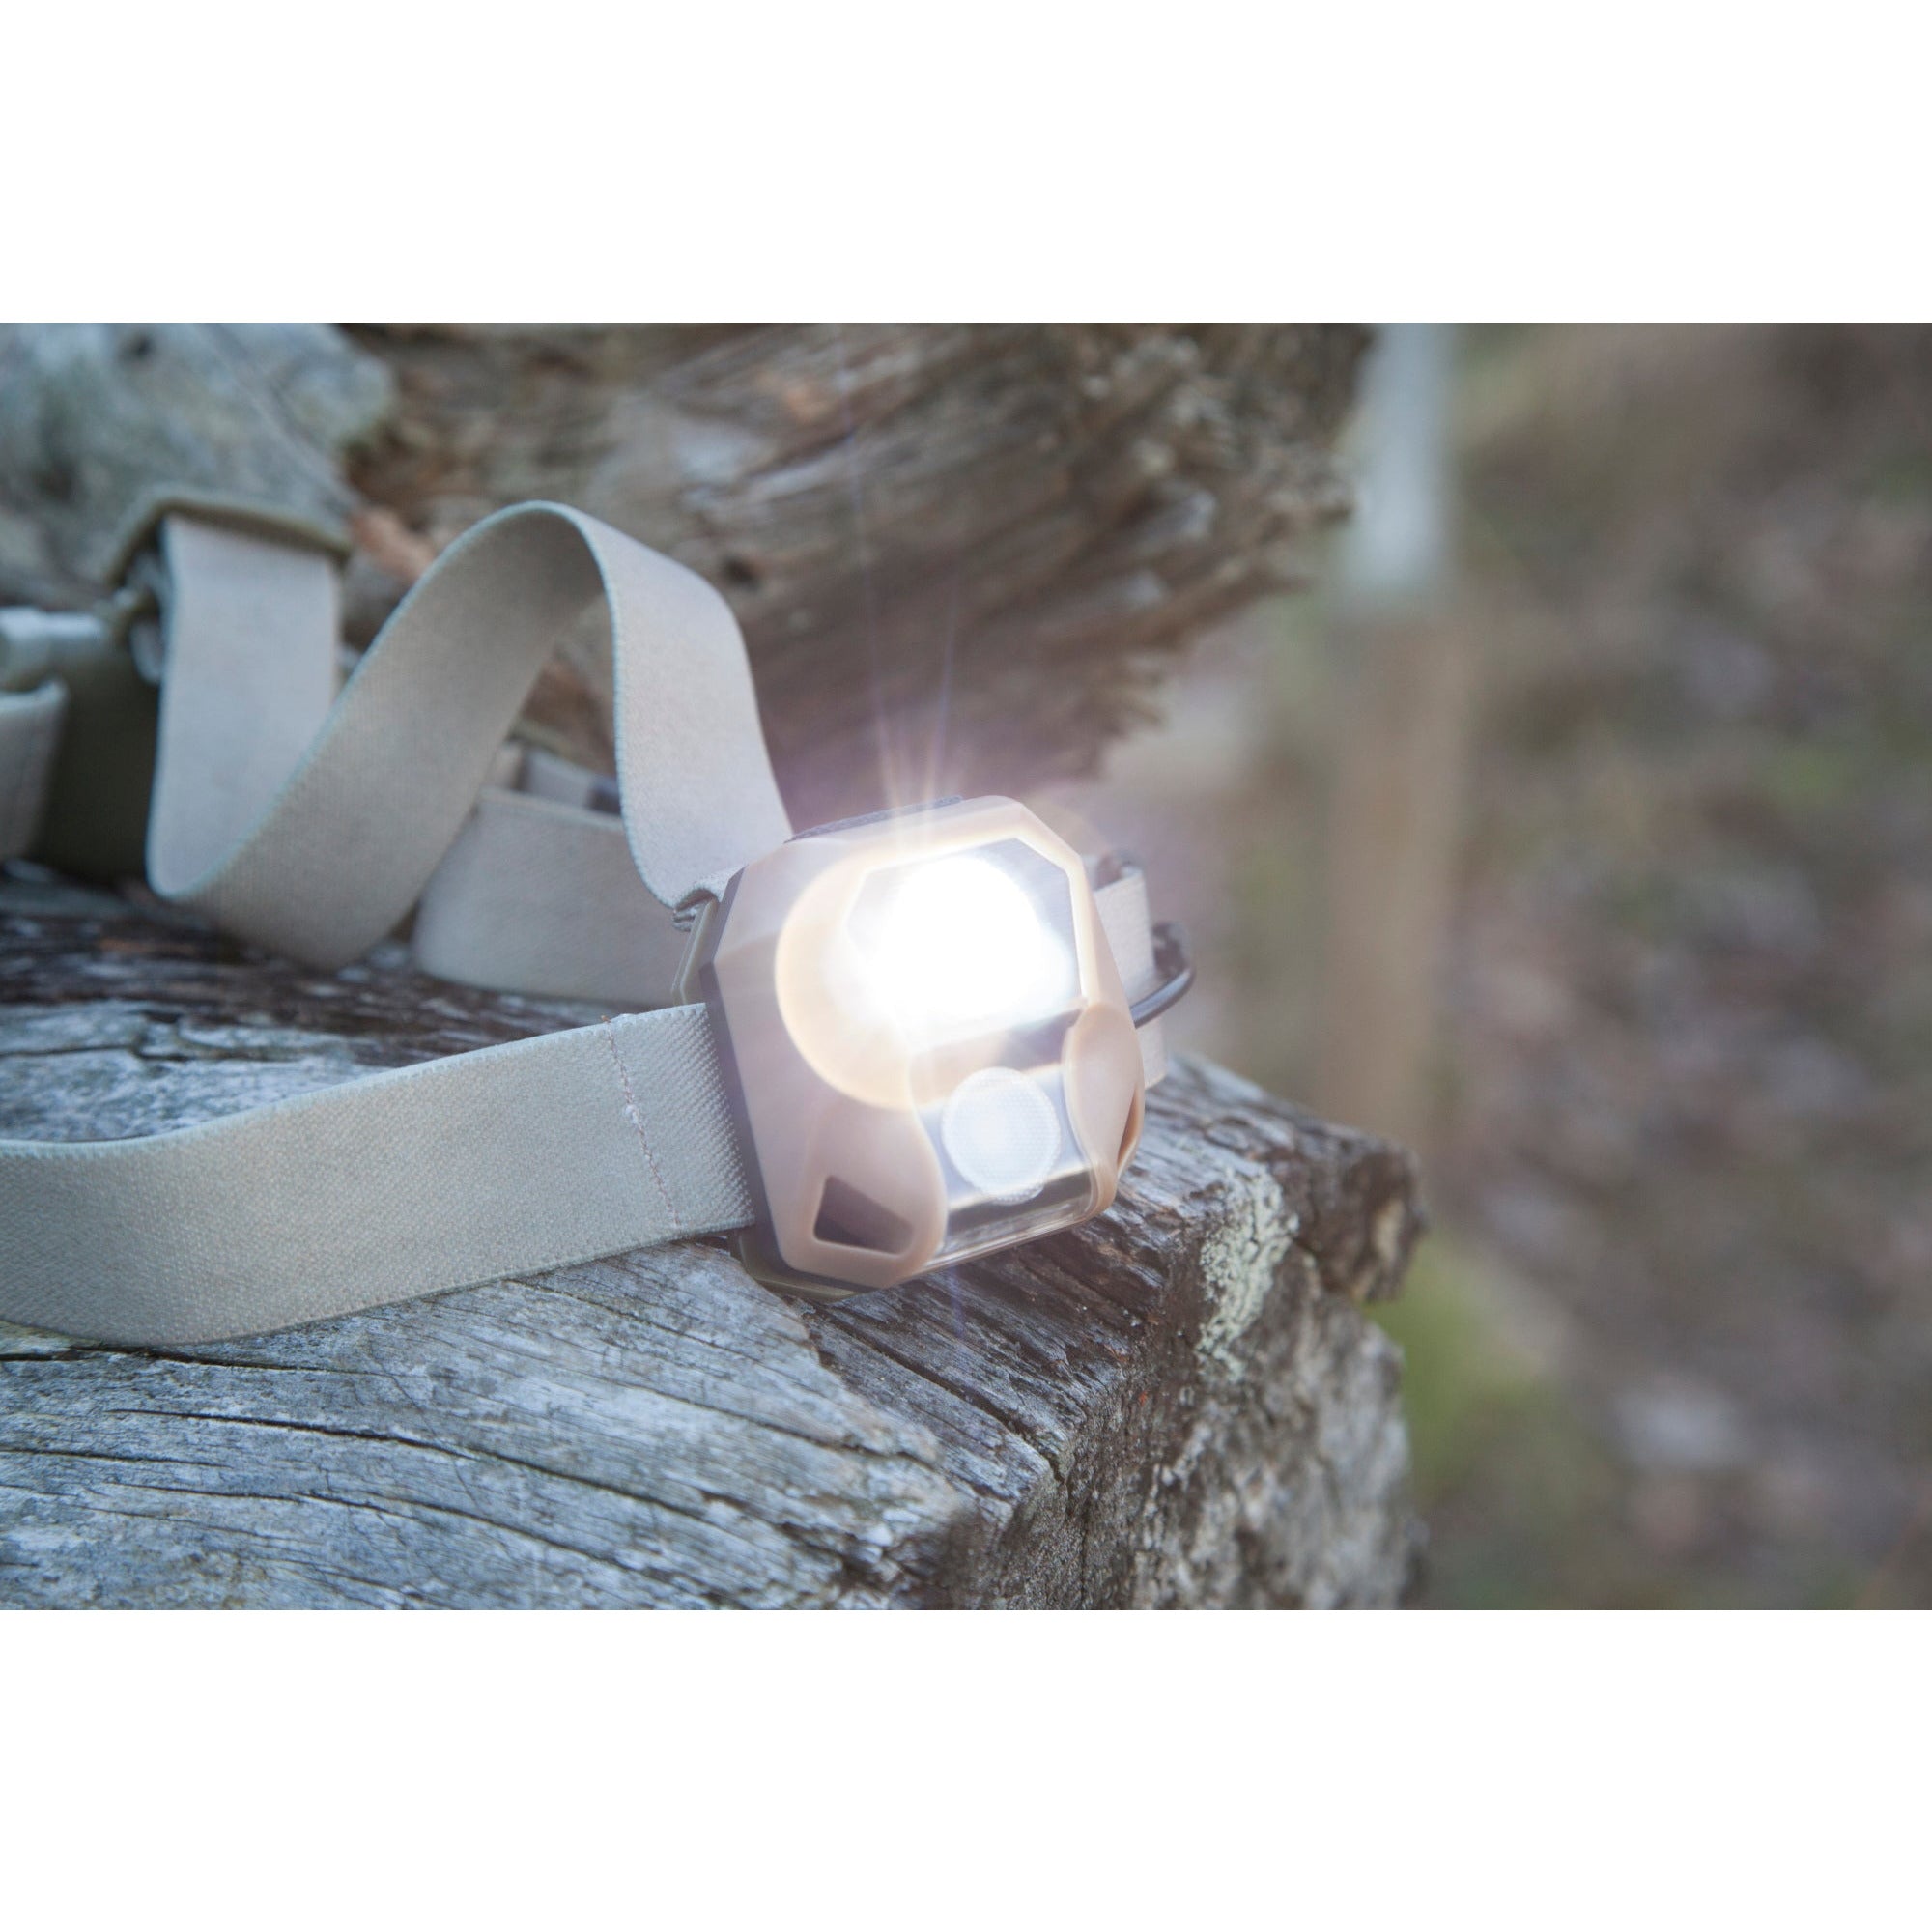 Internova Star Rider XL - Battery Powered LED Camping and Emergency Headlight